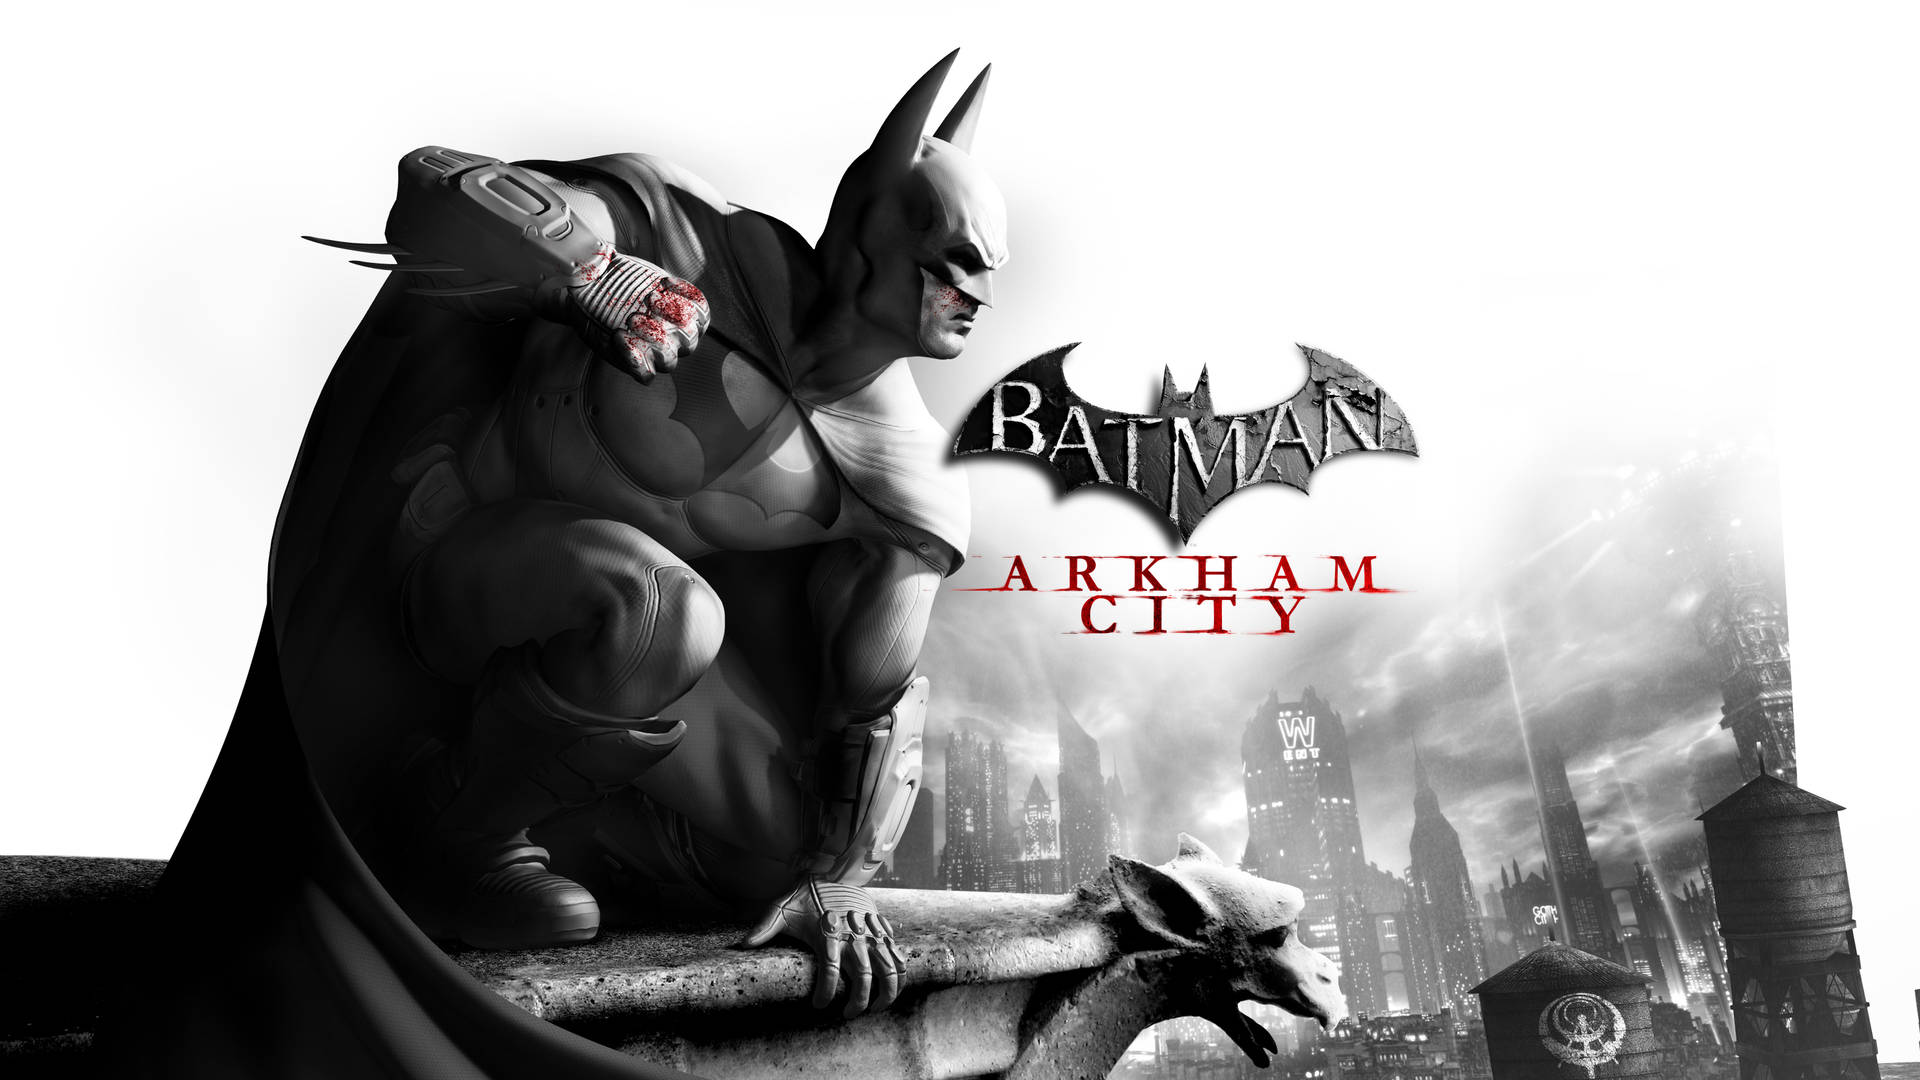 Batman Arkham City Poster Background